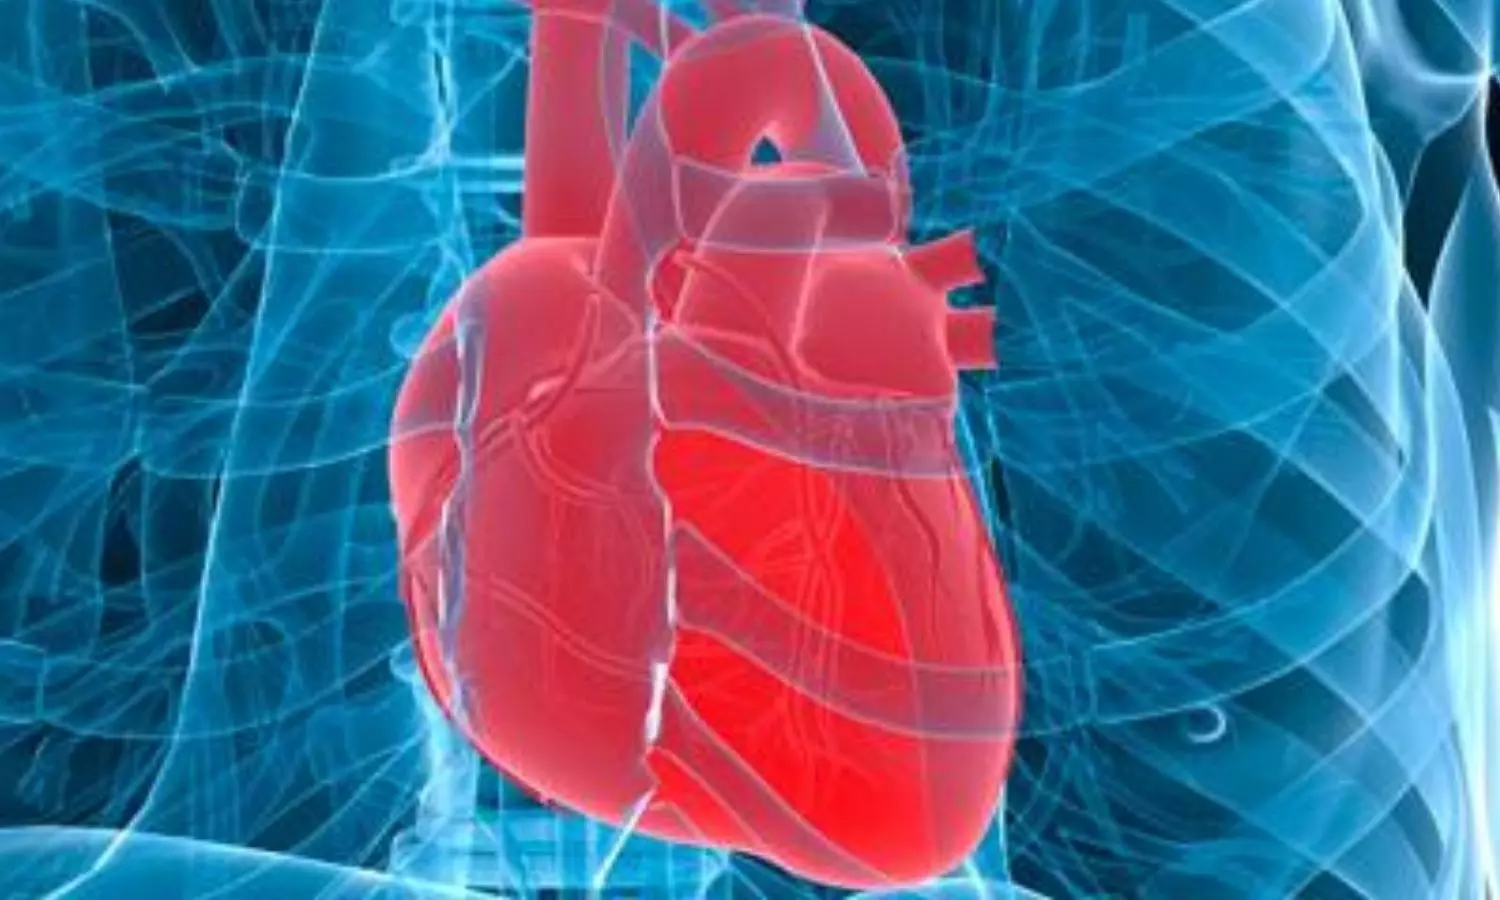 Cardiovascular MRI best modality for evaluating suspected cardiac tumors: Study